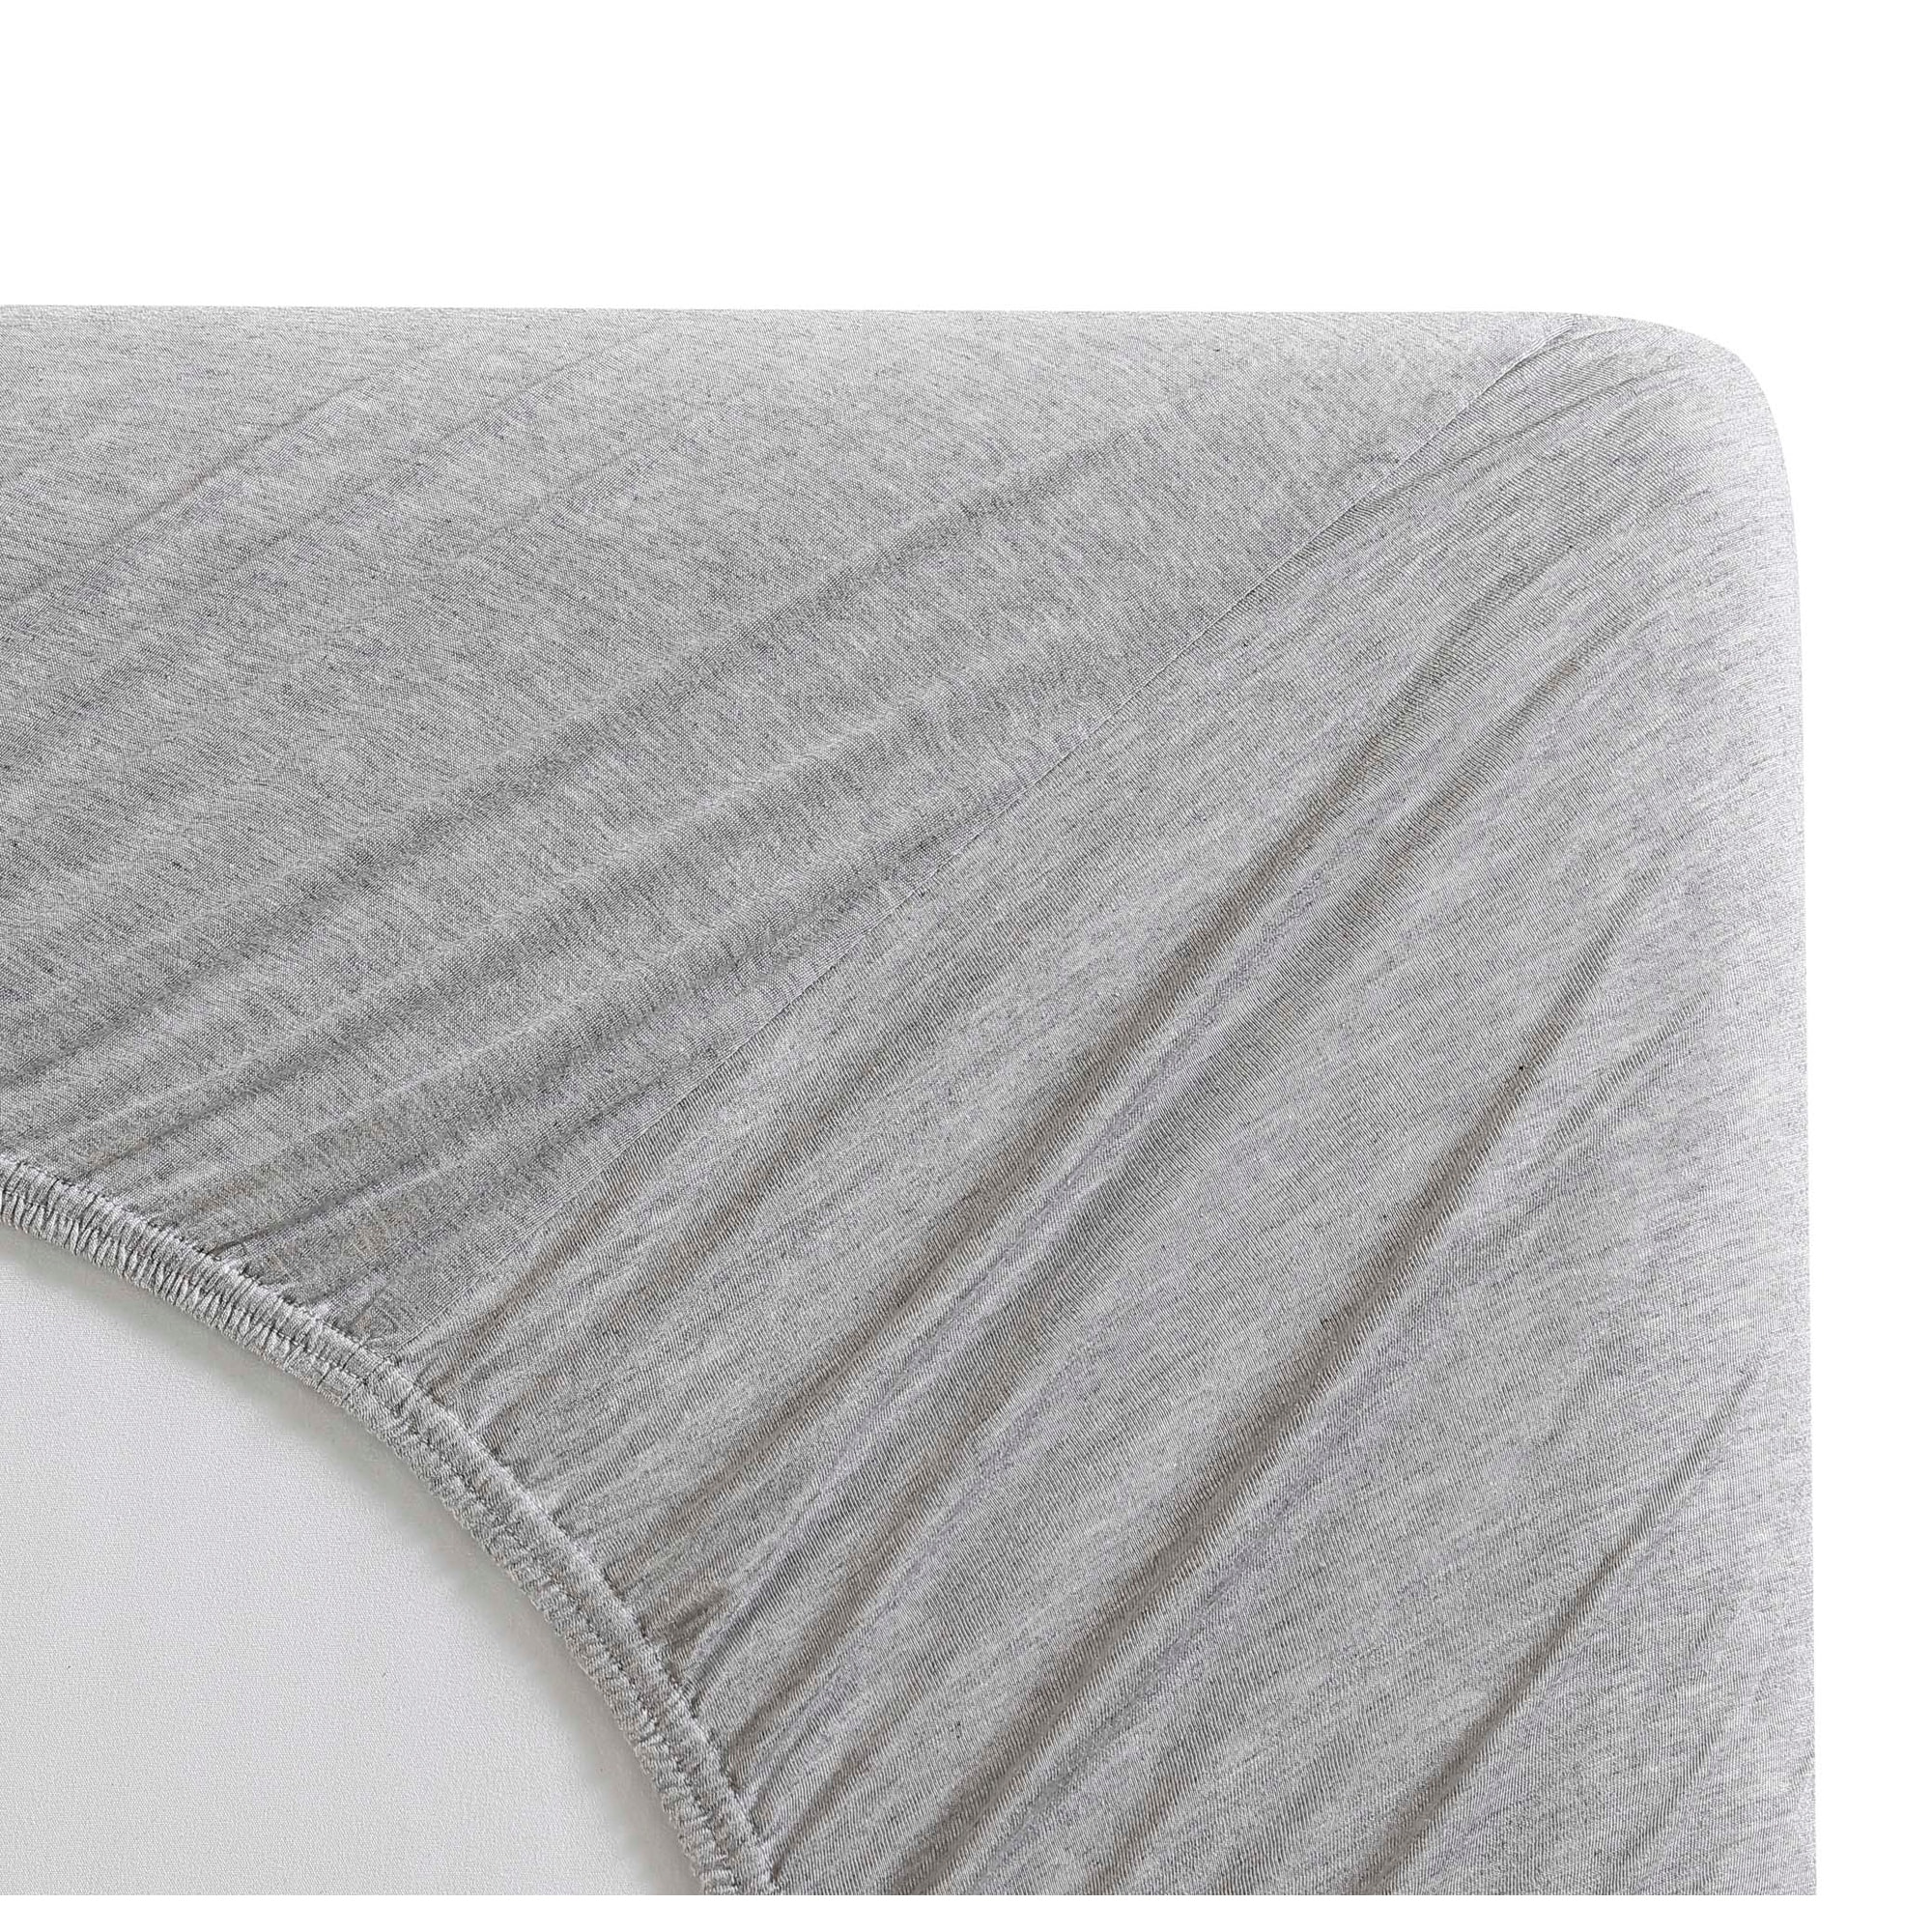  Brielle Home Tencel Modal – 100% Modal, Beech Tree Fiber –  T-Shirt Jersey Knit – Cooling, Breathable, Wrinkle Resistant – Sheet Set,  Heather Blue, Twin : Home & Kitchen